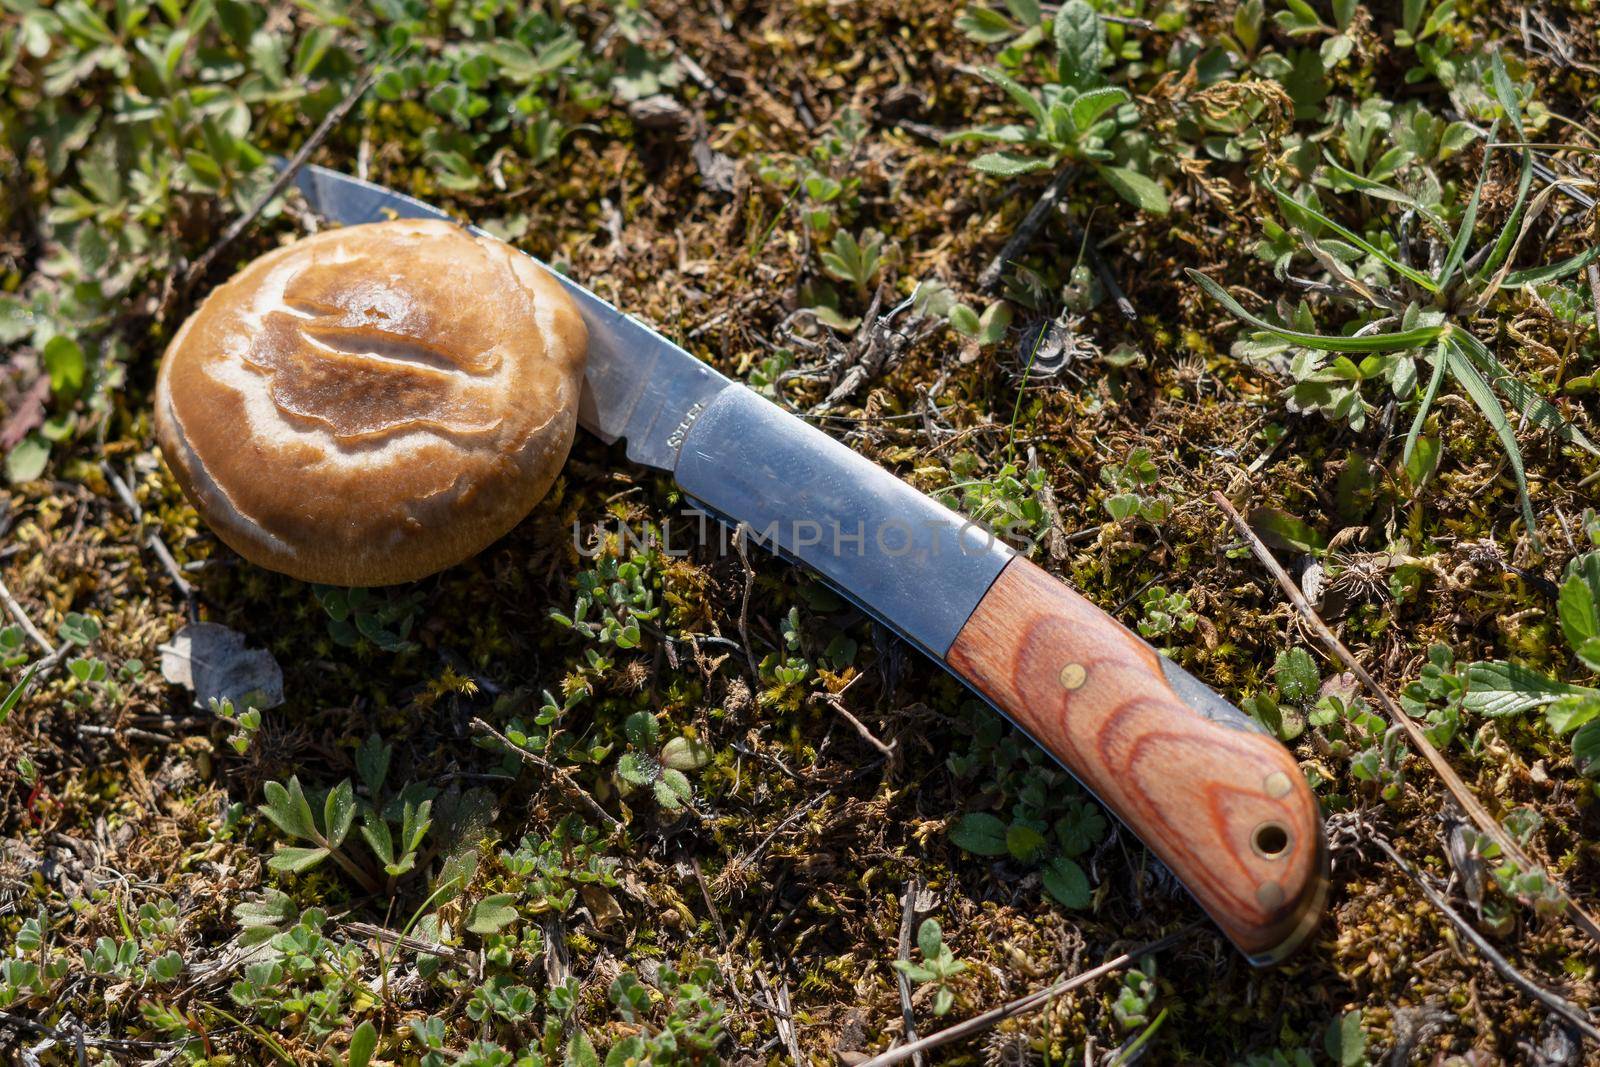 thistle mushroom in the field cut with a razor knife by joseantona